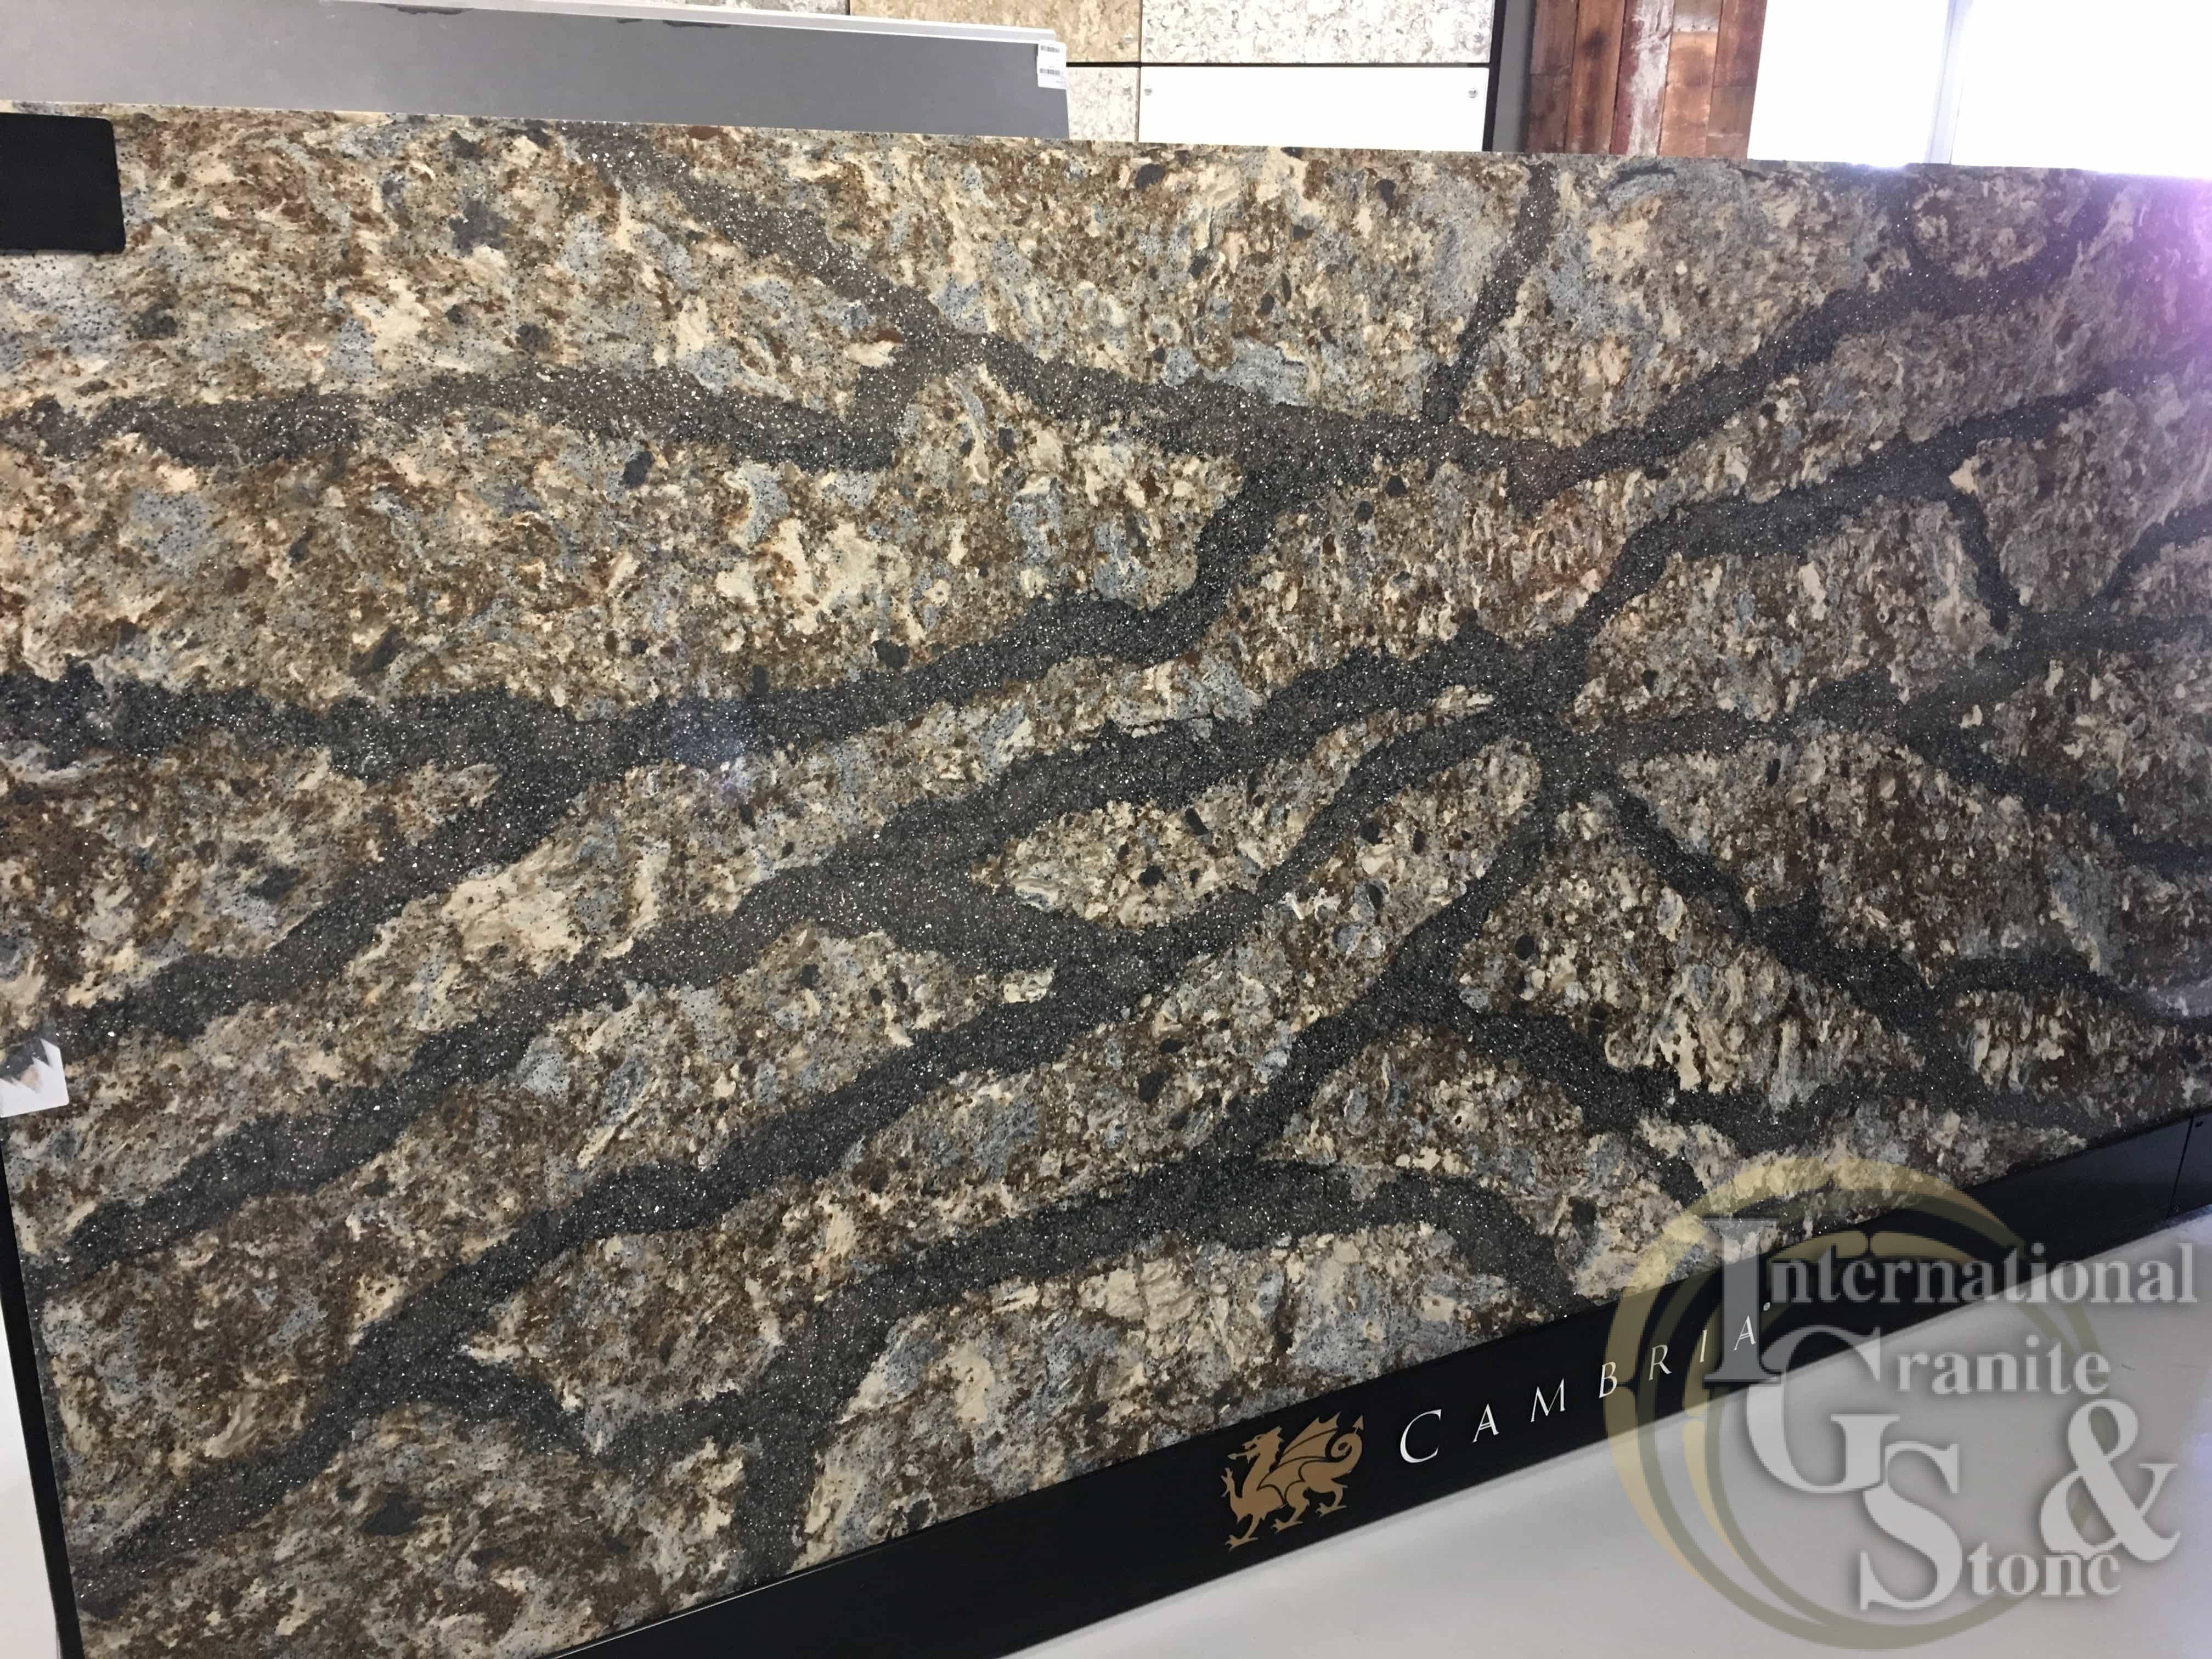 International-granite-and-stone-clearwater-quartz